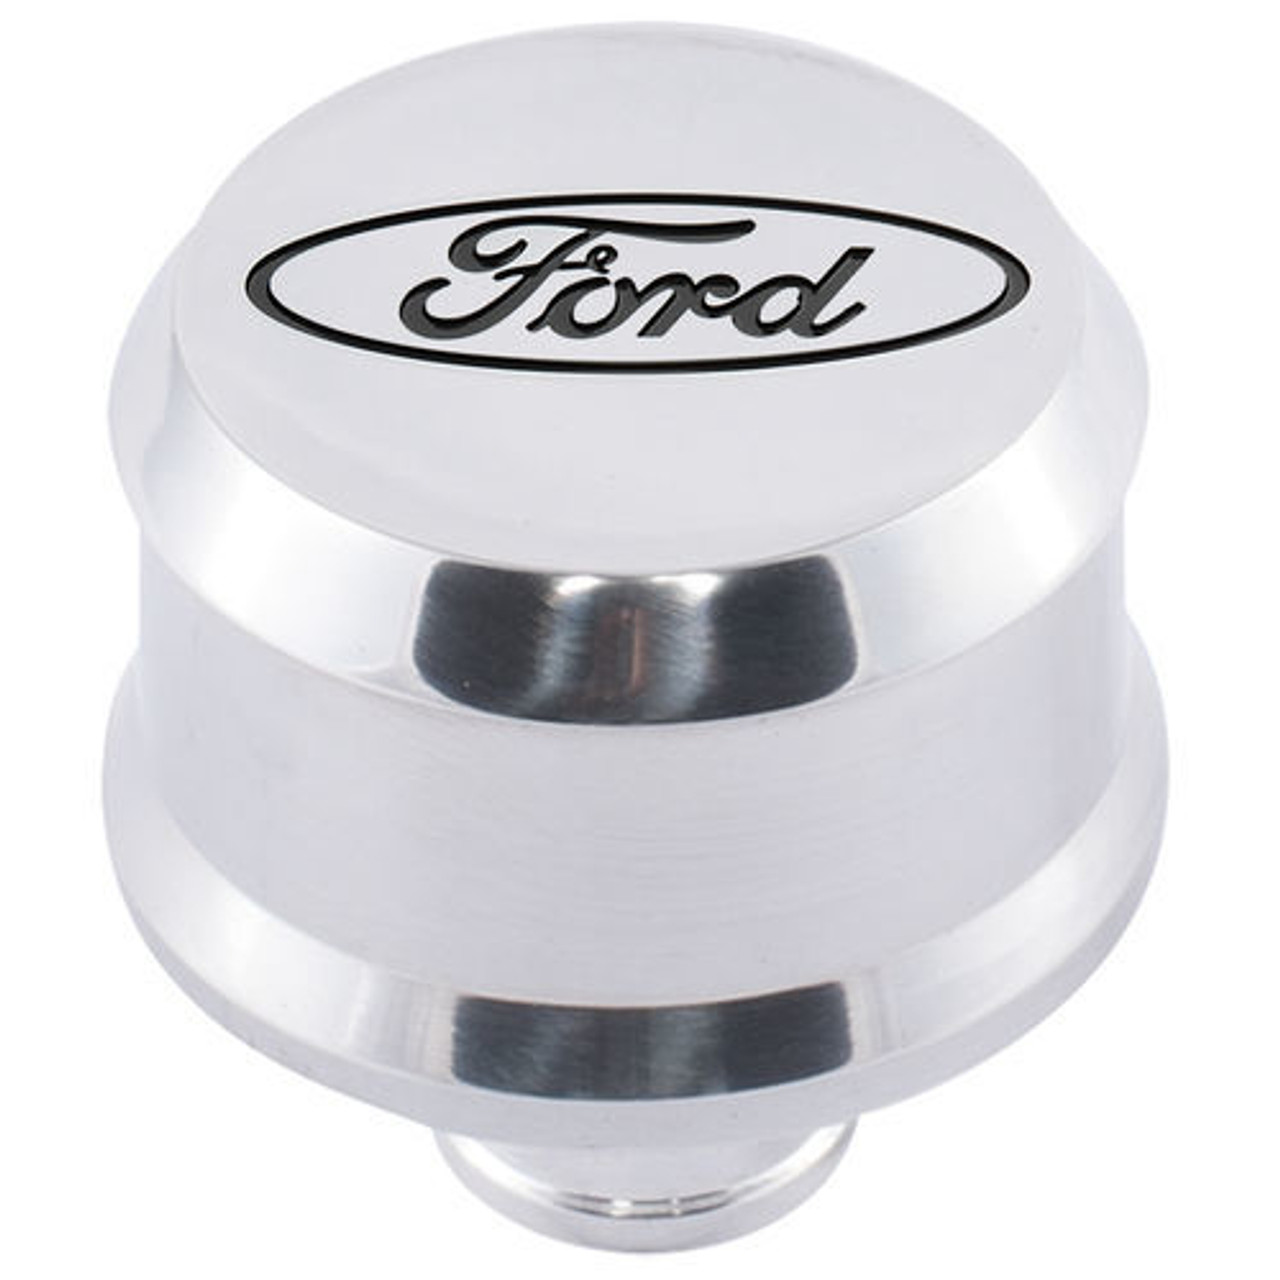 Ford Slant-Edge Breather Recessed Black Oval Pol